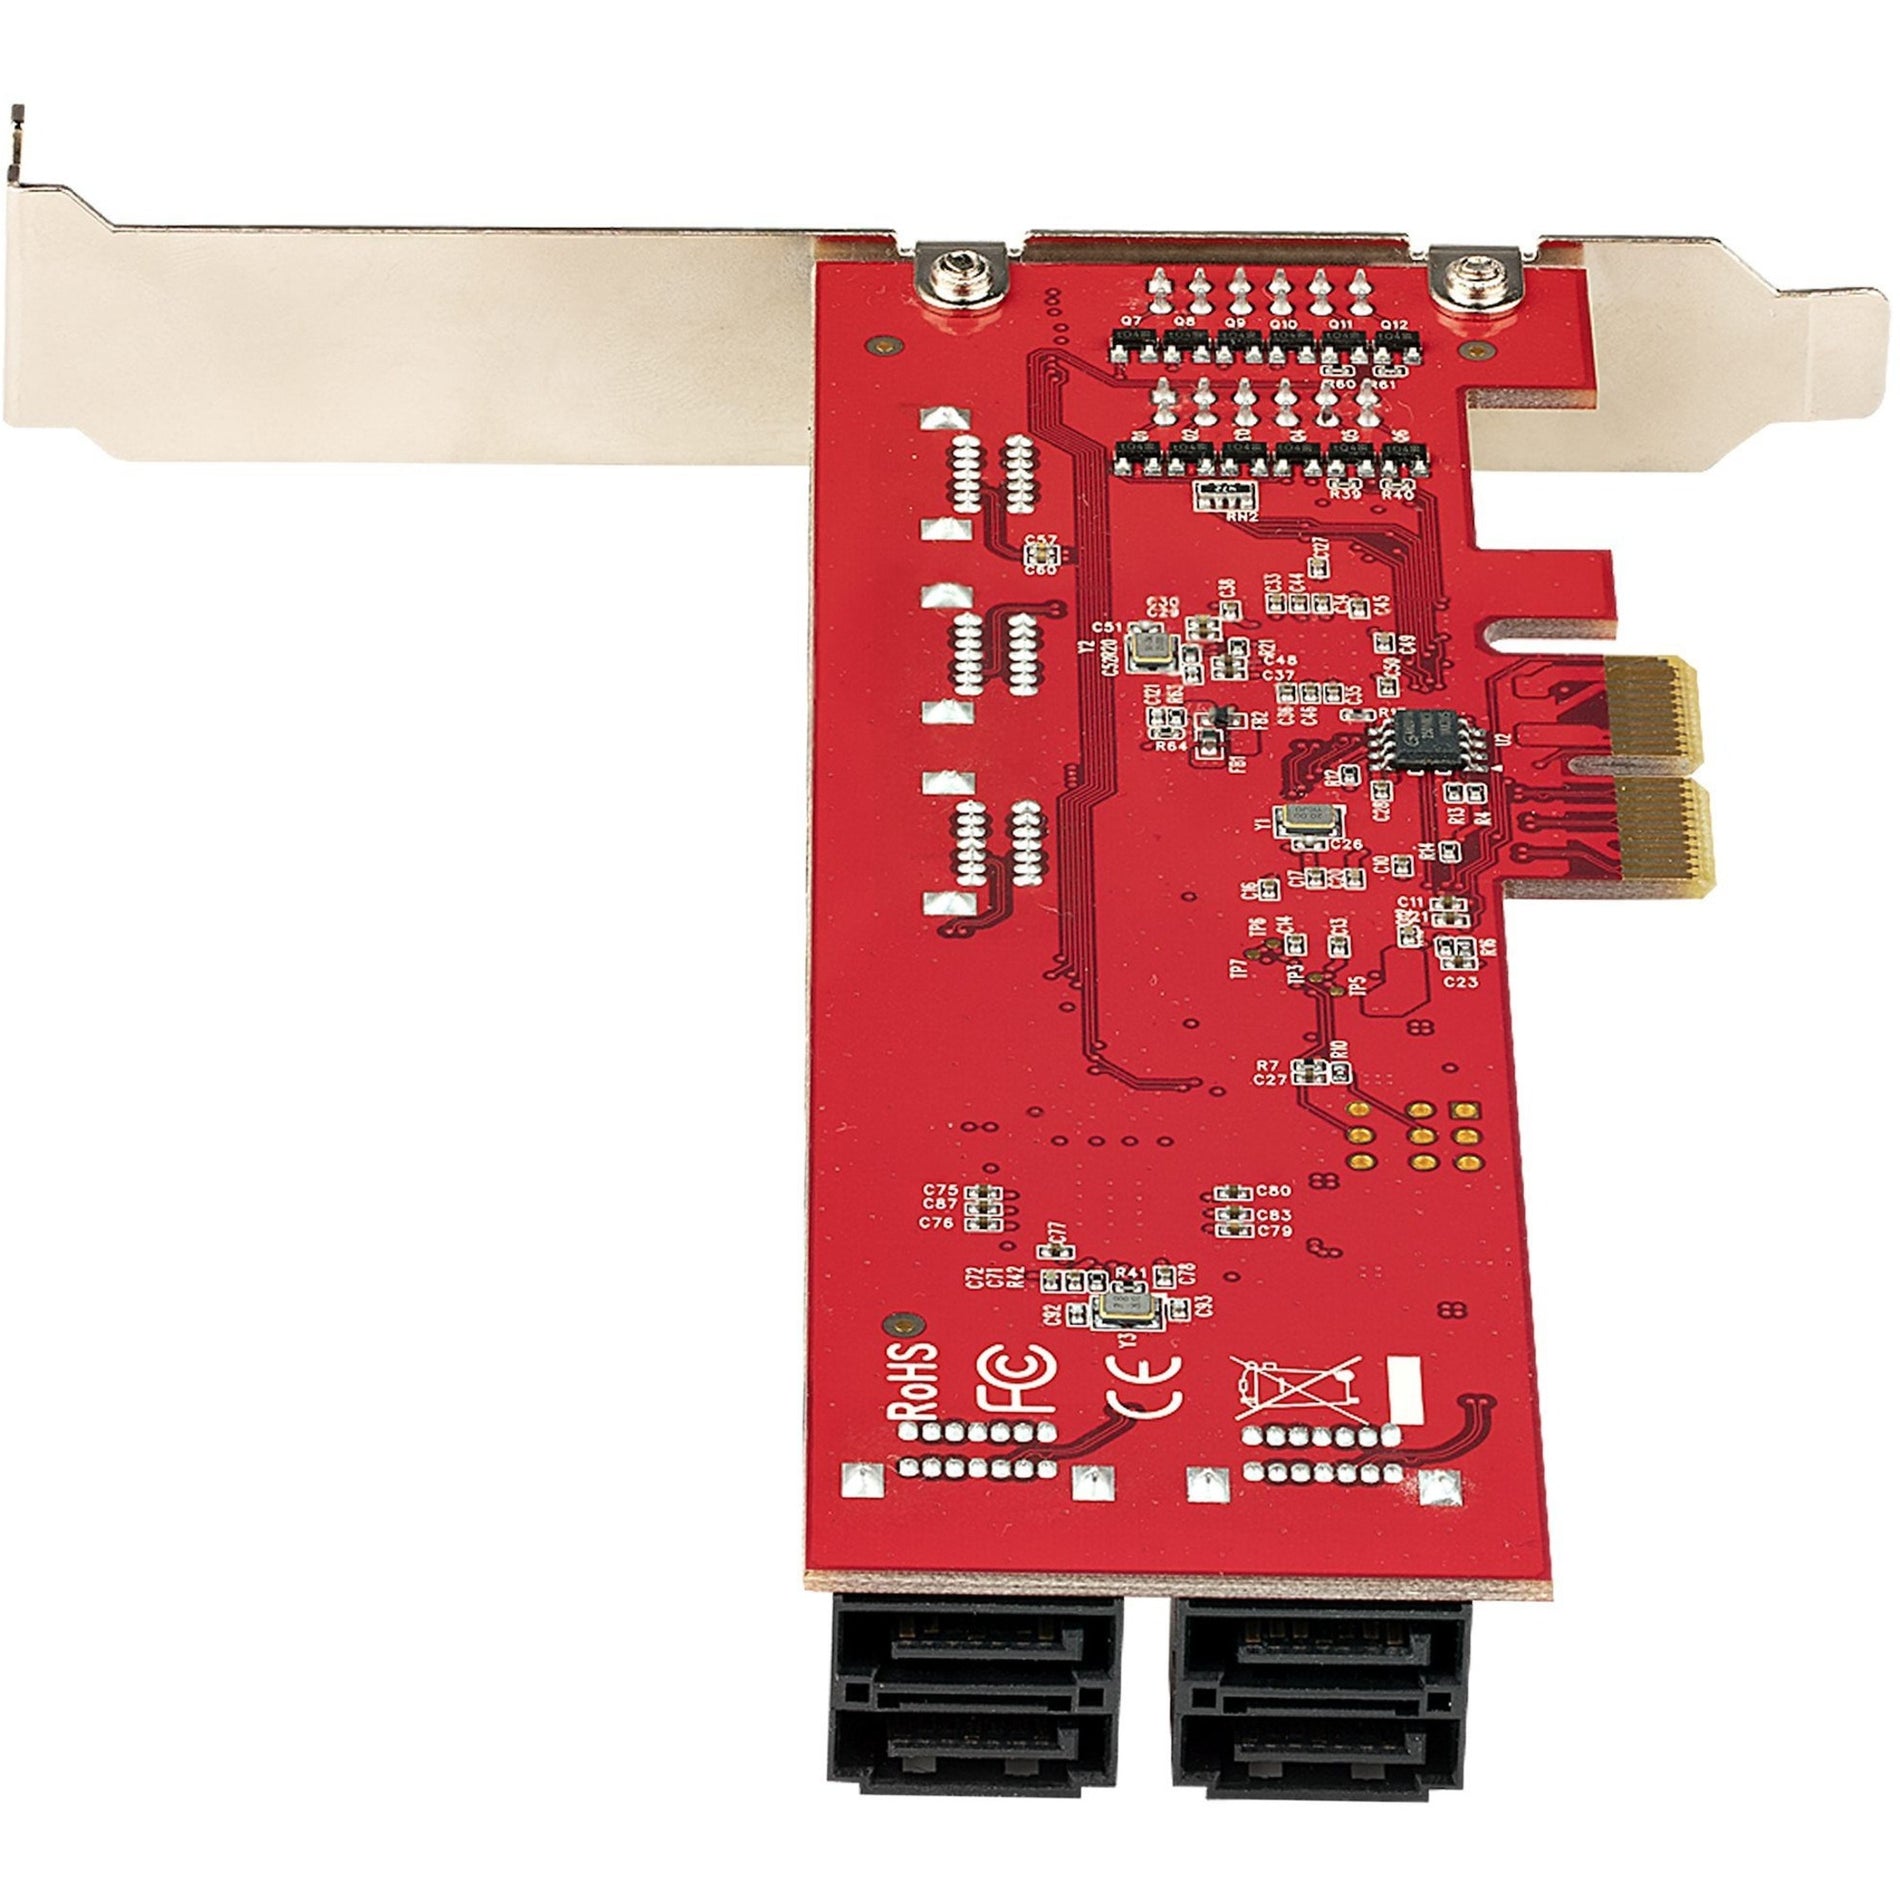 StarTech.com 10P6G-PCIE-SATA-CARD PCIe SATA Card, 10 Port SATA Expansion Card, 6Gbps SATA Adapter, 10 Mini-SAS/SATA Cables